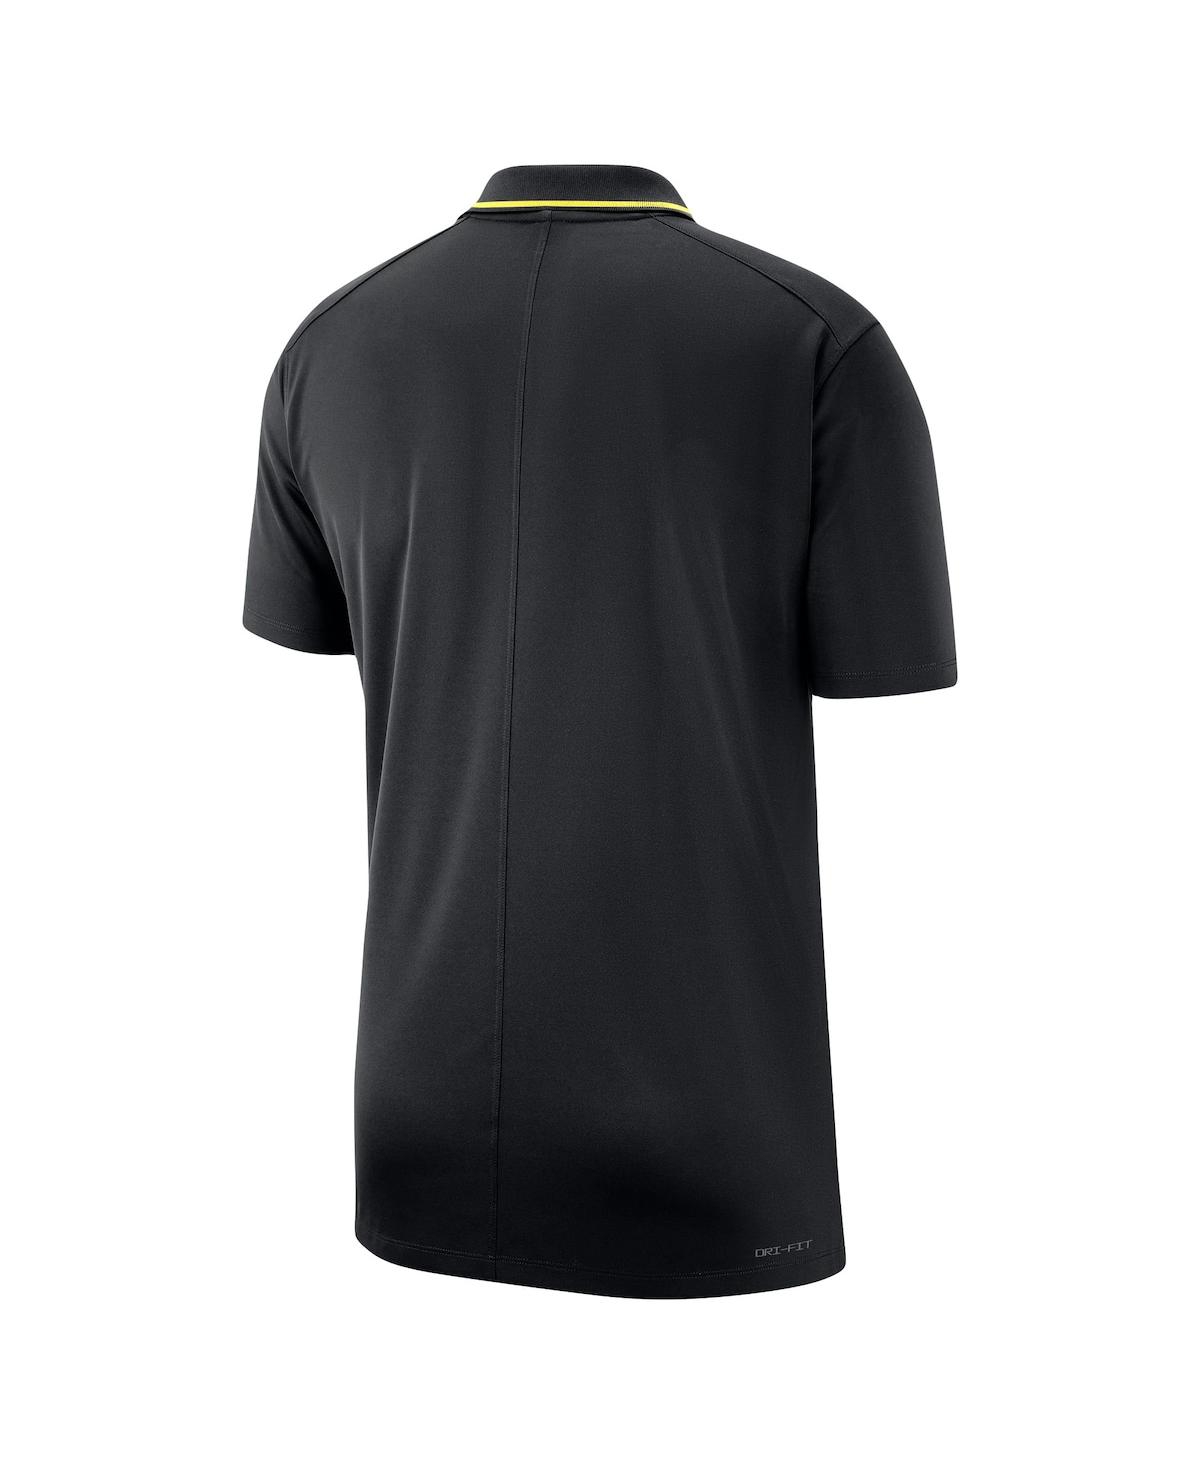 Shop Nike Men's  Black Oregon Ducks Coaches Performance Polo Shirt